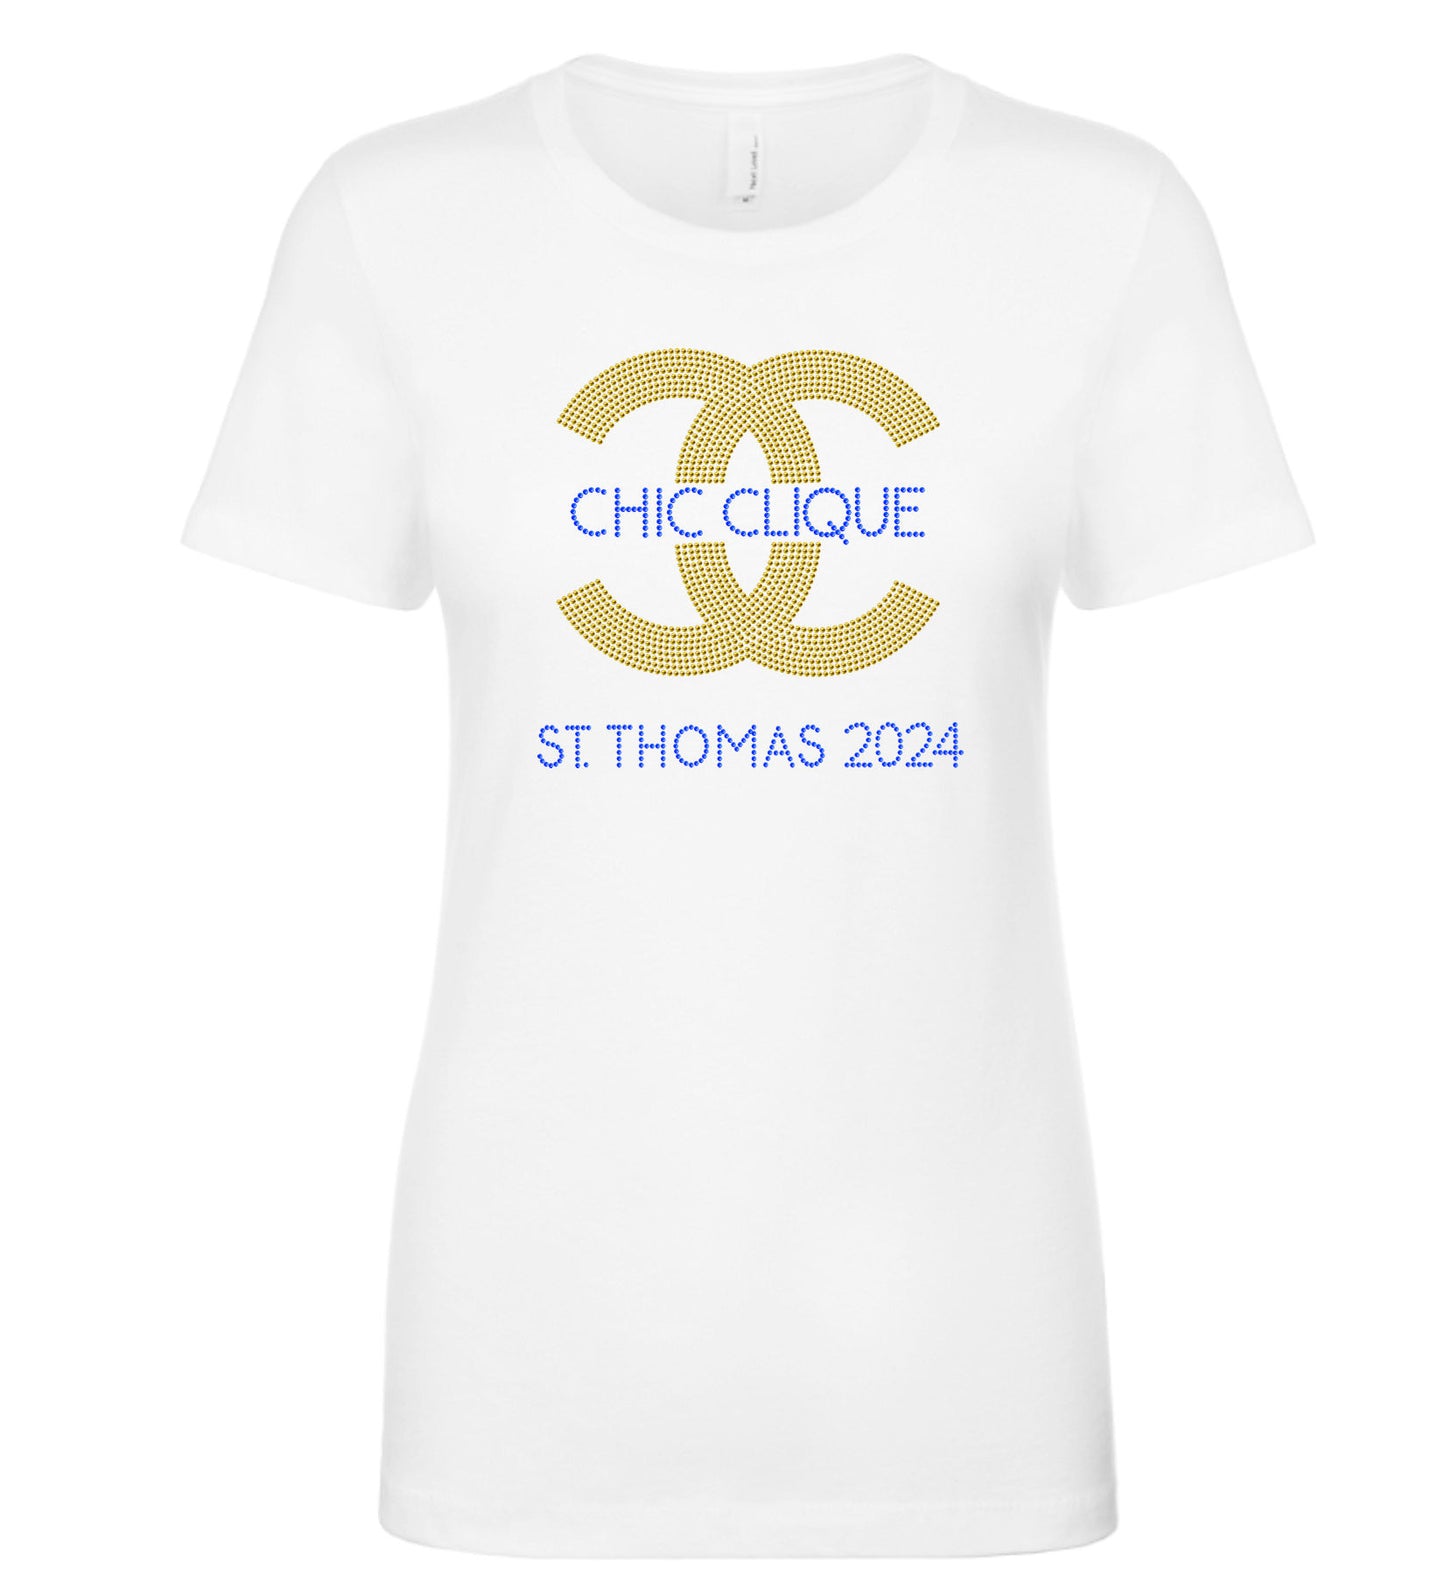 Chic Clique Rhinestone Personalized T-Shirt